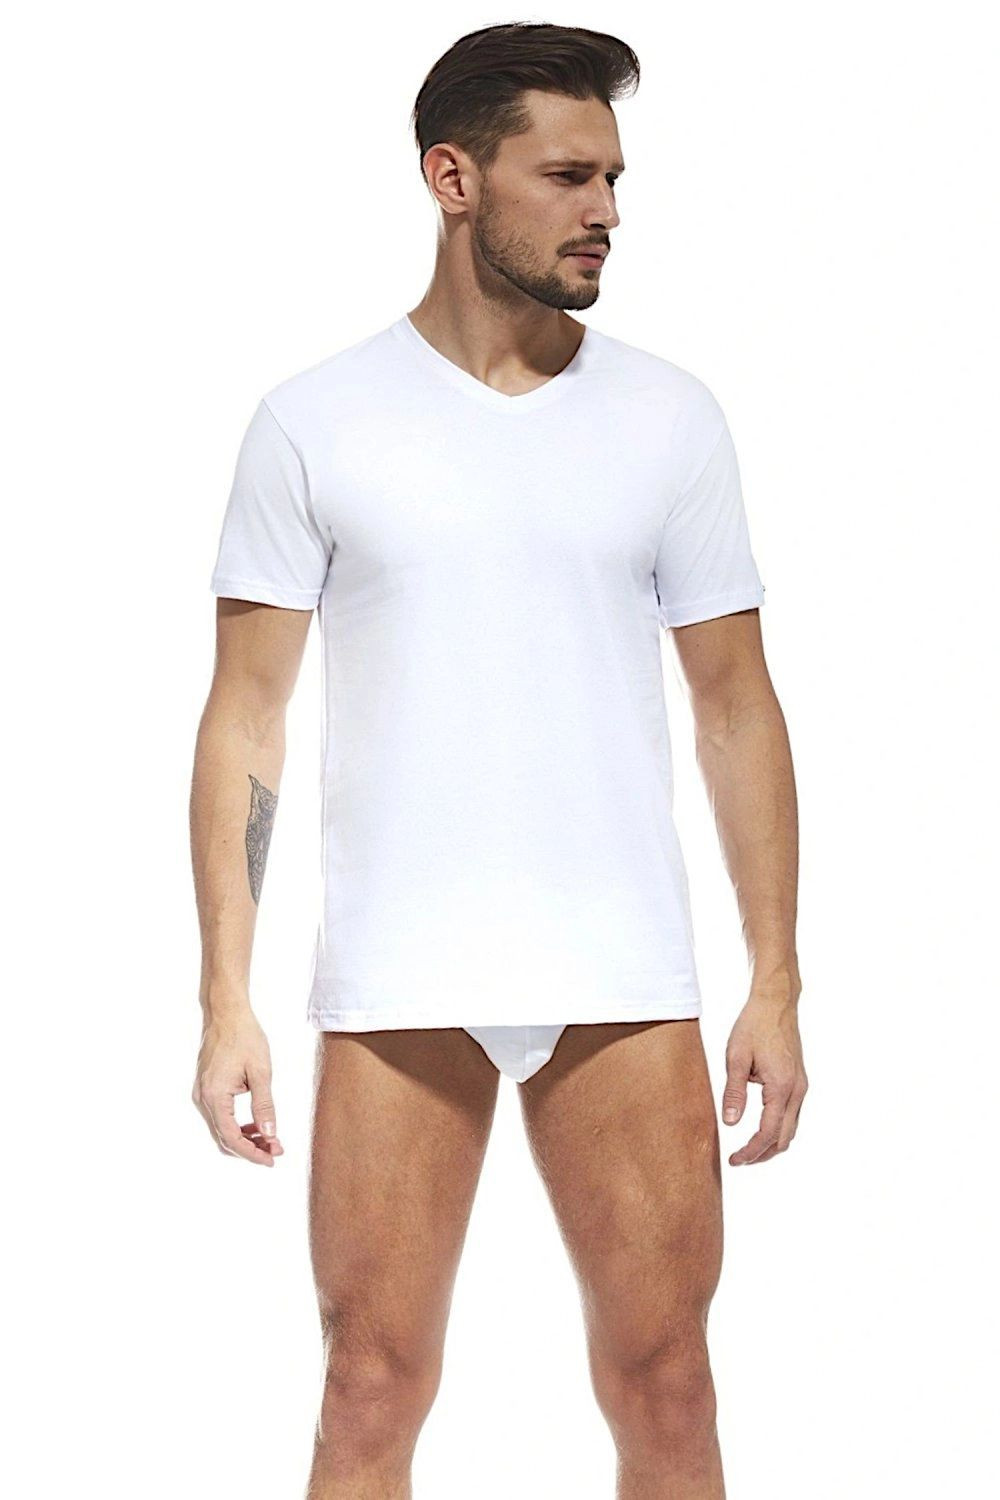 Pánské tričko 201 Authentic new biała - CORNETTE Bílá M